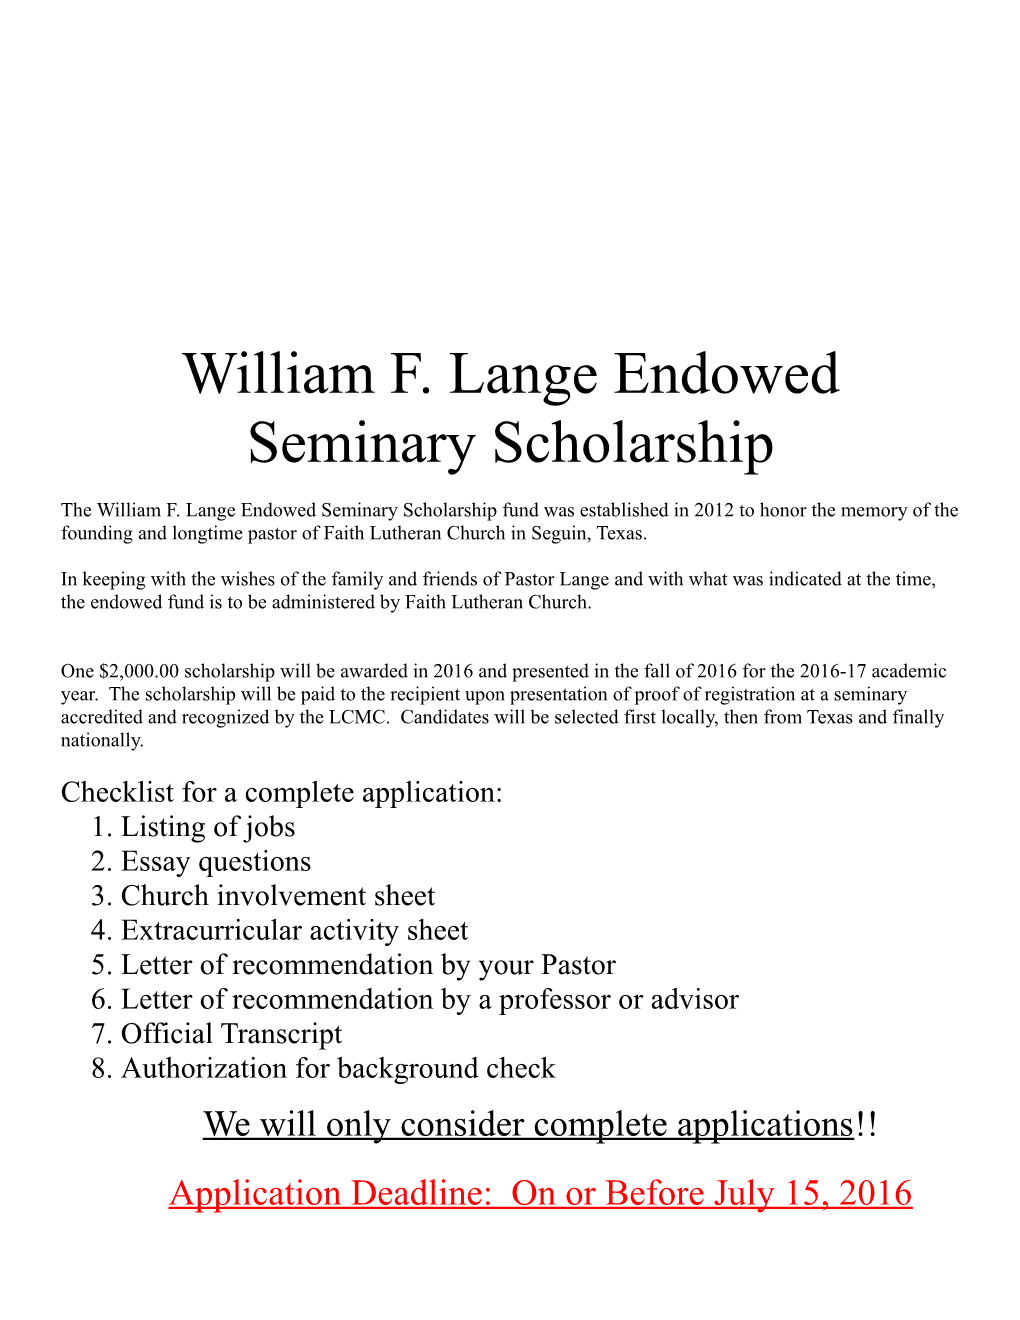 William F. Lange Endowed Seminary Scholarship